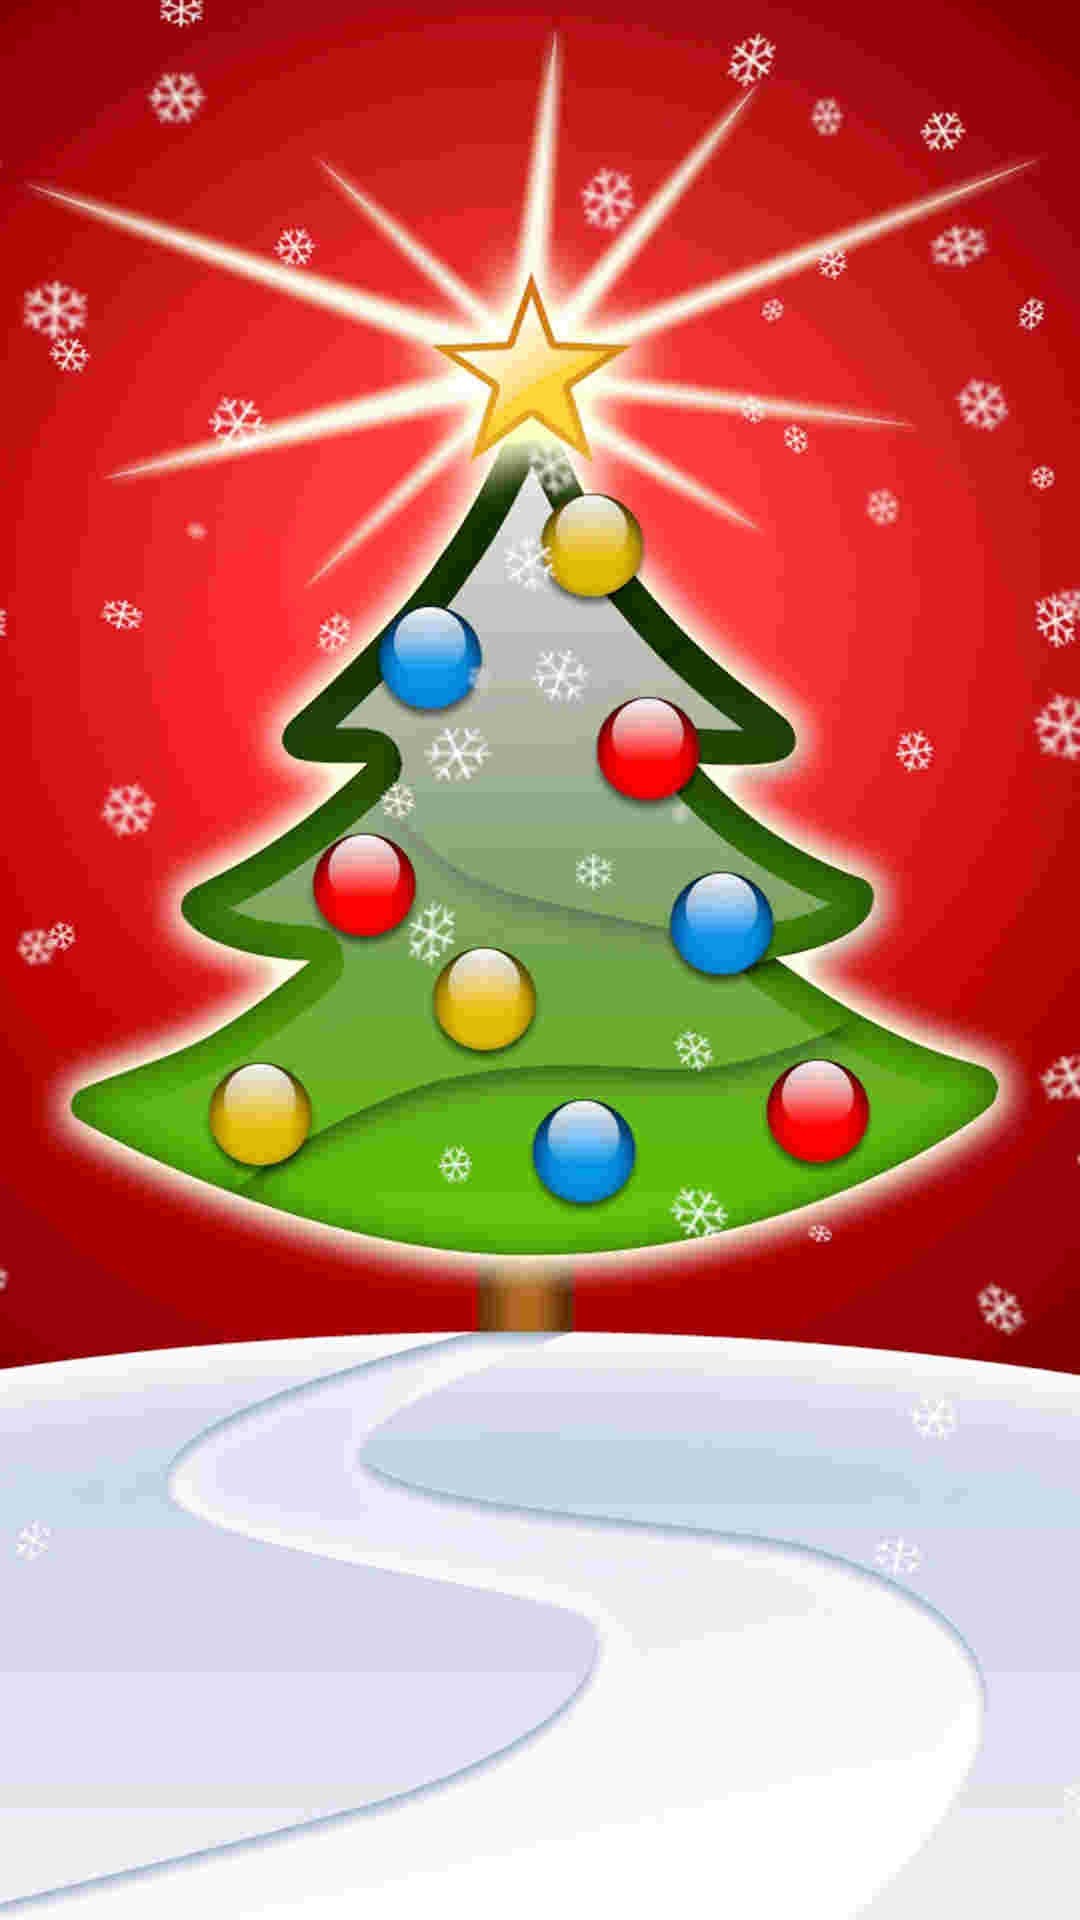 1080x1920 2014 Christmas tree iPhone 6 plus wallpaper - mountain, road #2014 # Christmas #